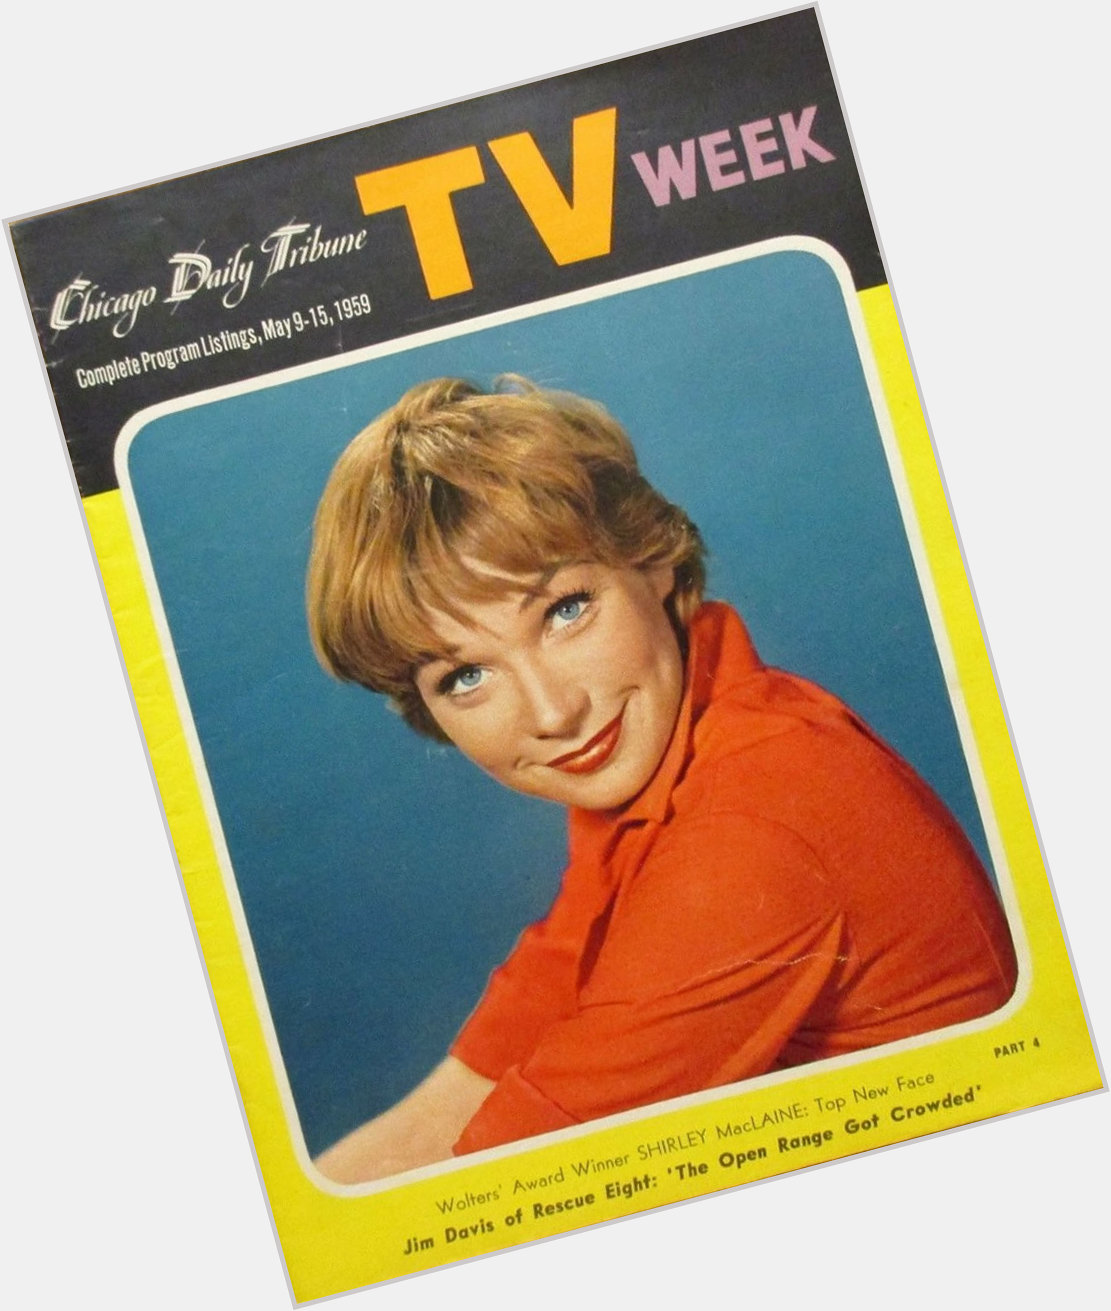 Happy Birthday to Shirley MaClaine, born OTD in 1934
Chicago Tribune TV Week.  May 9-15, 1959 